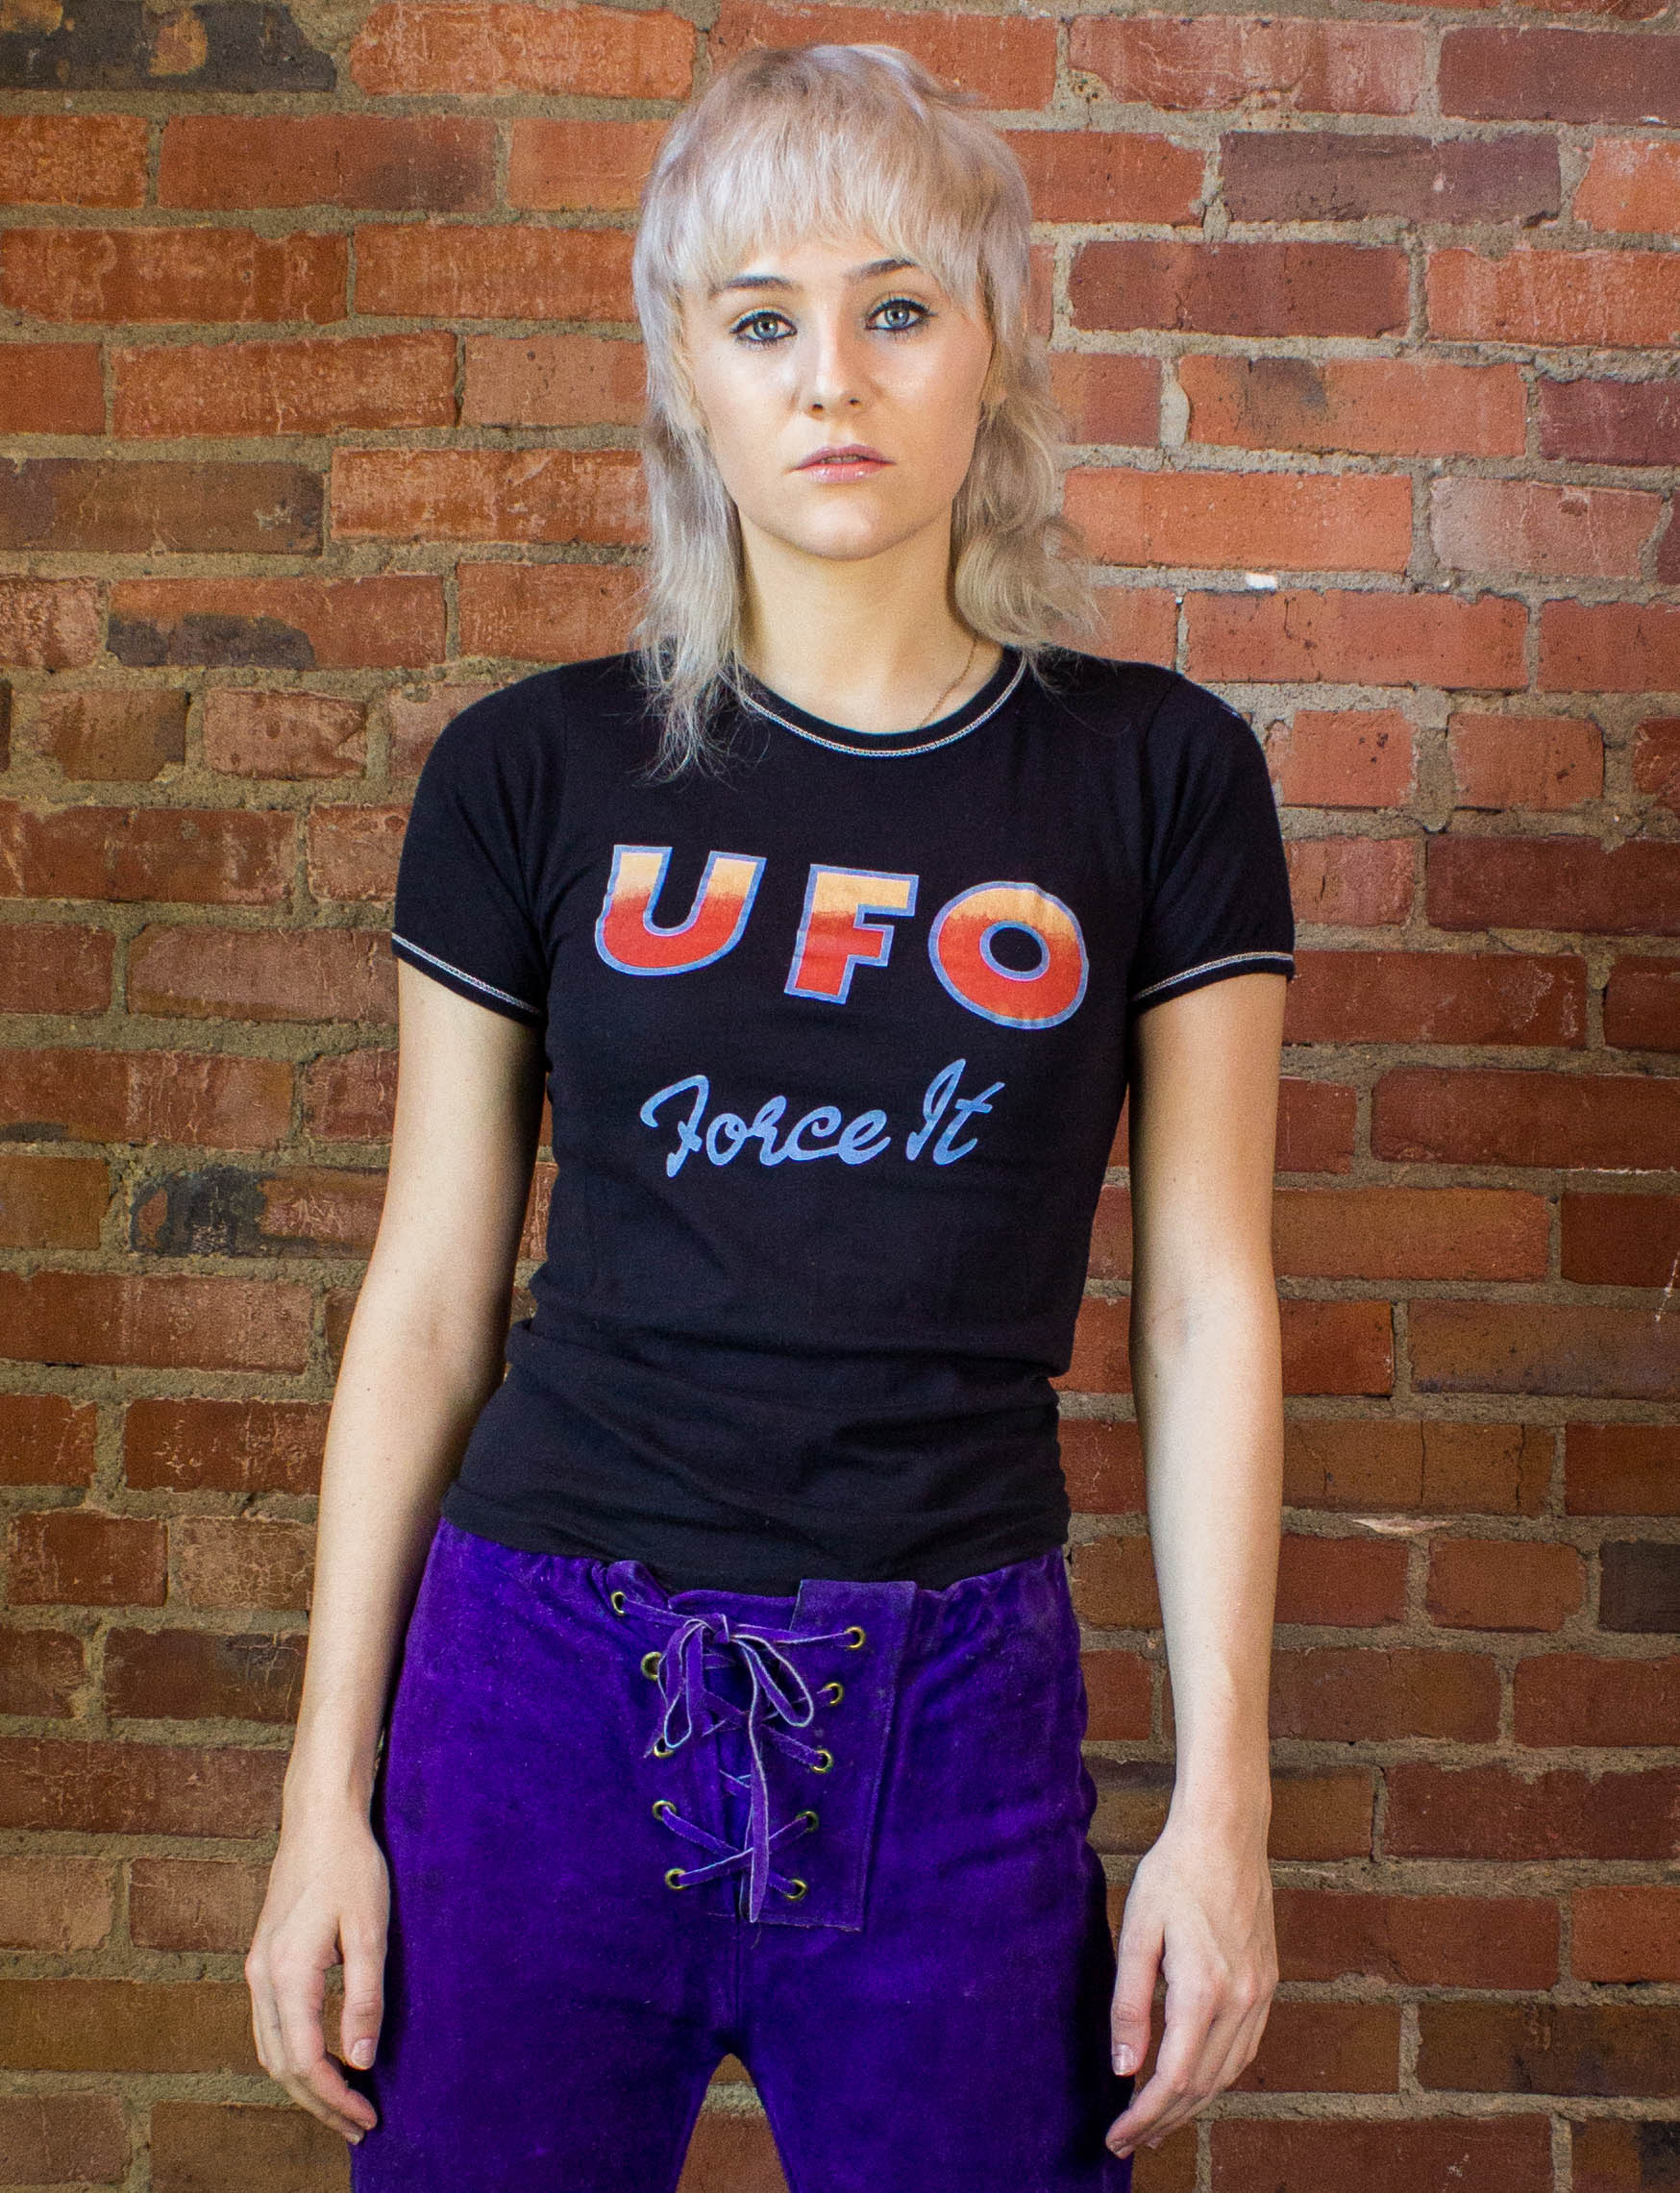 UFO 70s Force It Chrysalis Promo Black Ringer Concert T Shirt Unisex XS